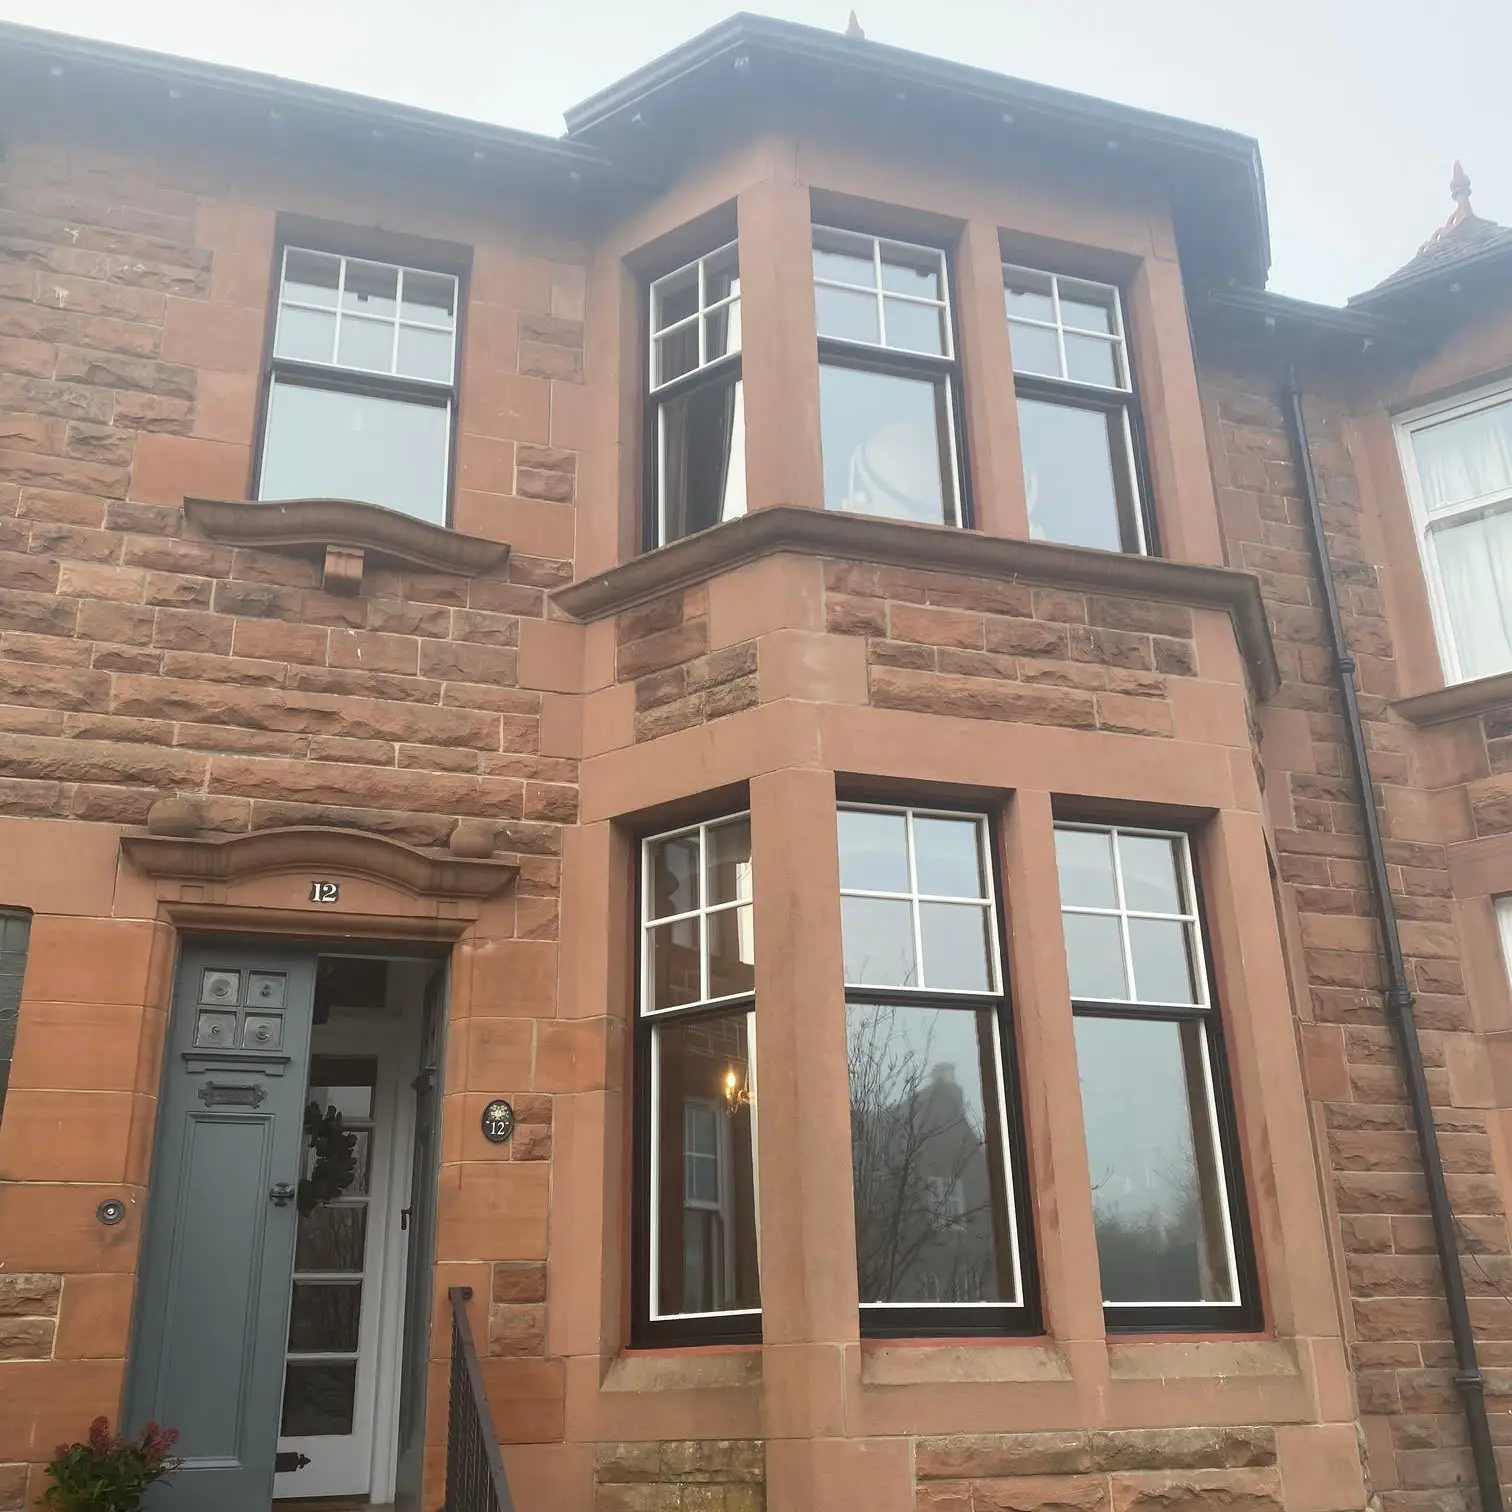 LW Sash and Case Windows Glasgow Scotland - Traditional Sash windows